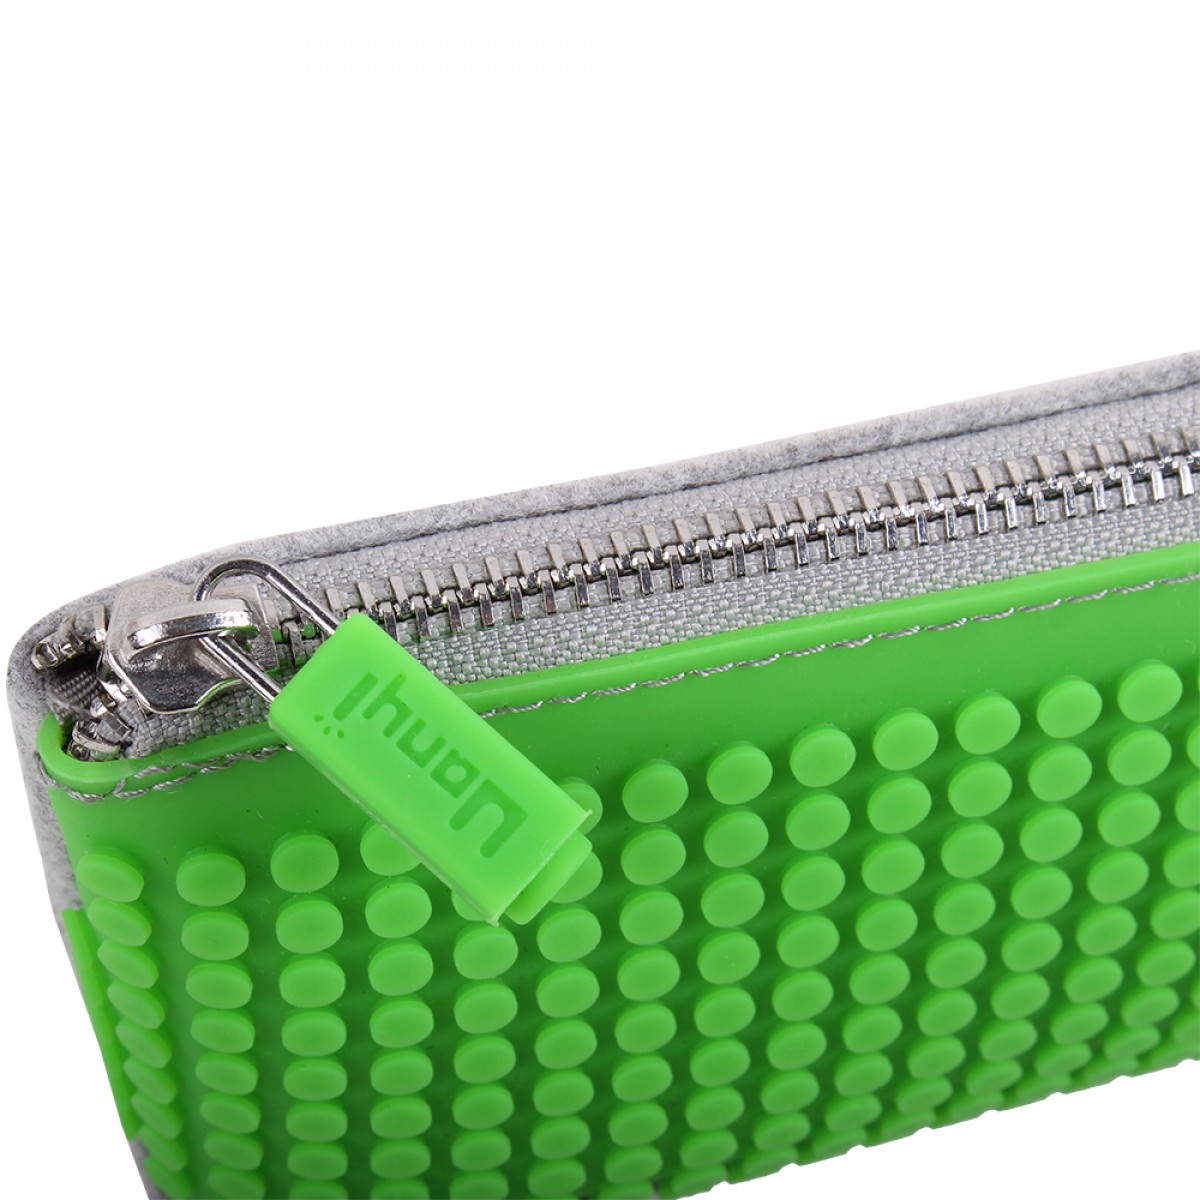 UPixel Wy-b002 Pencil Case, Apple Green